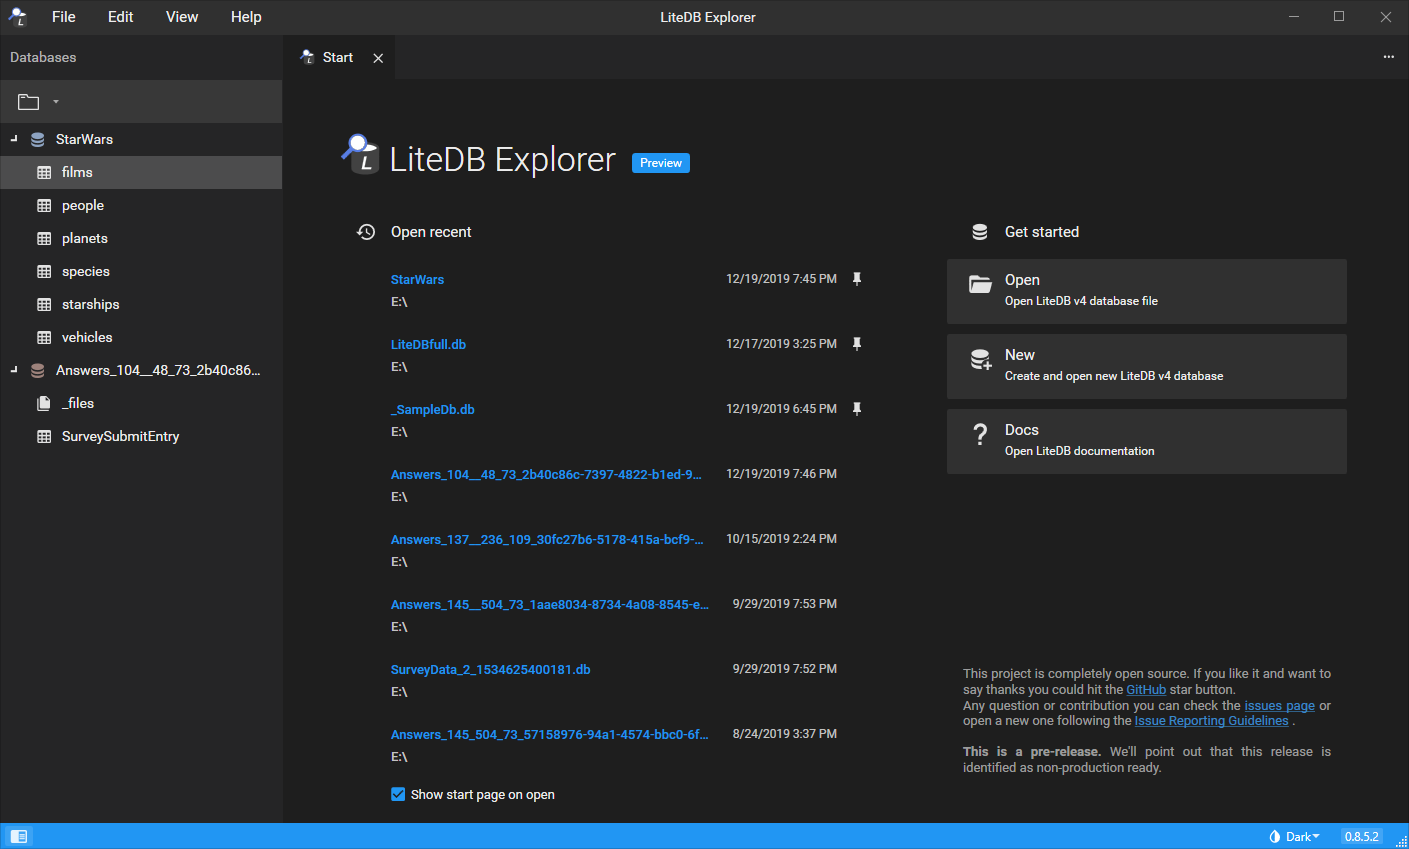 More information about "LiteDB Explorer"